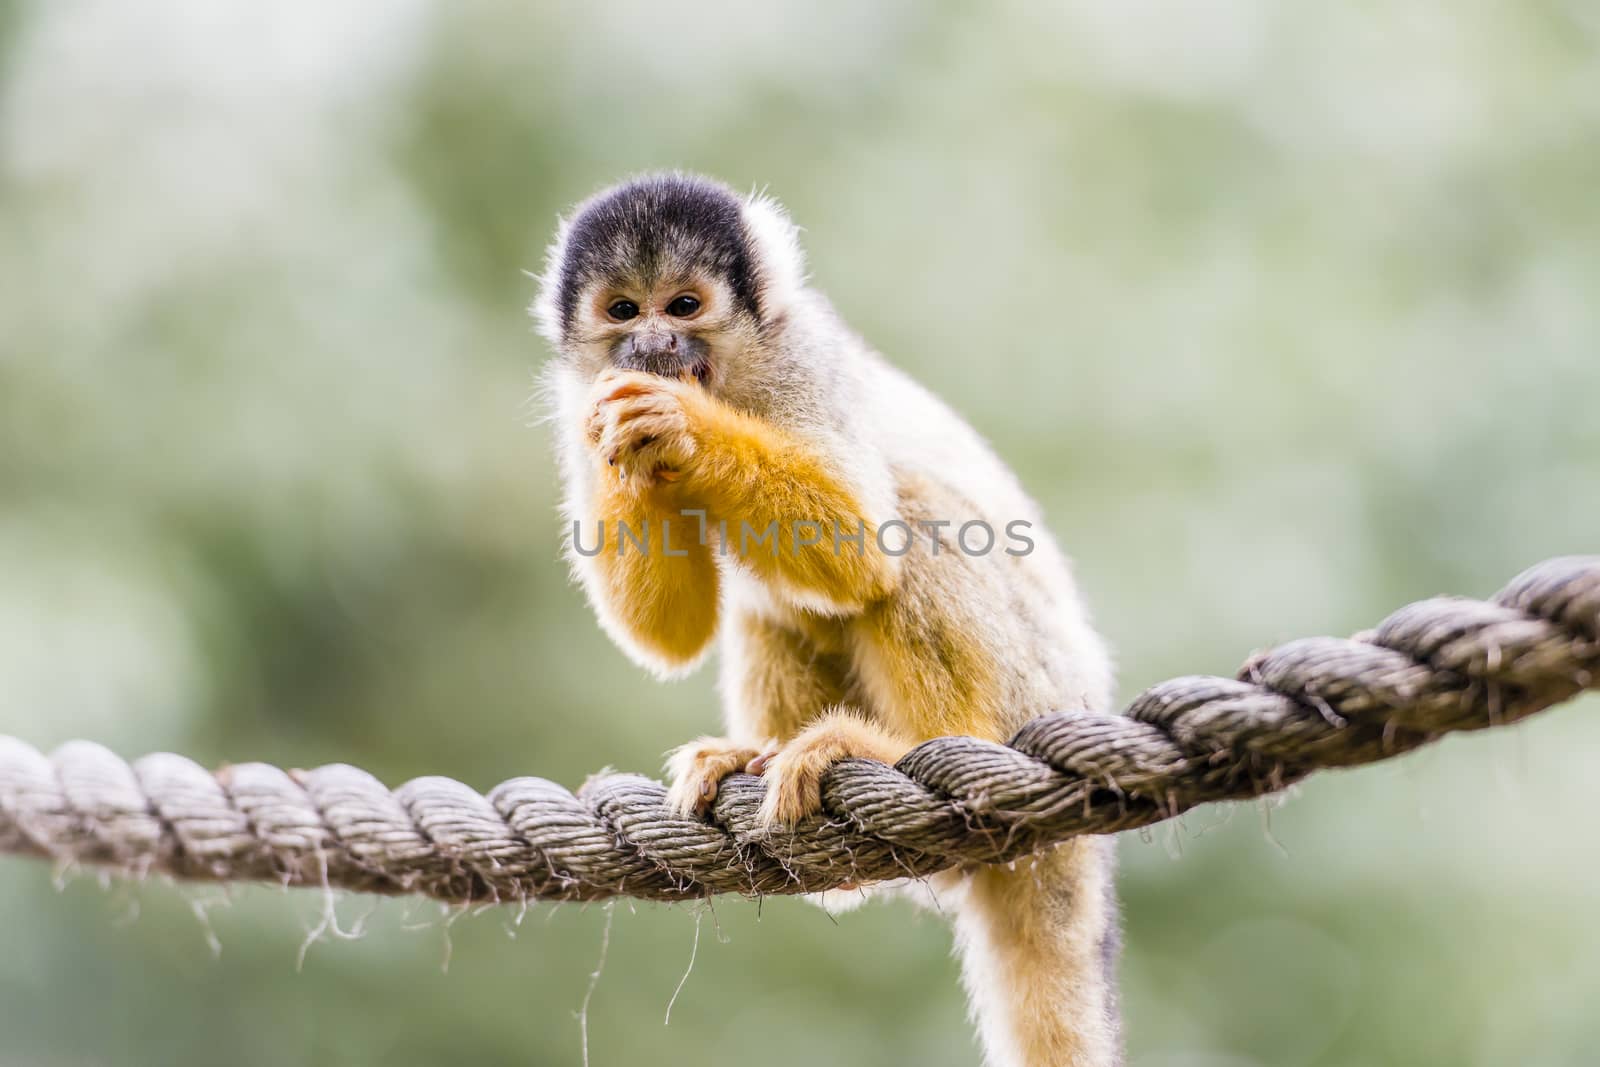 Black-capped squirrel monkey by MohanaAntonMeryl